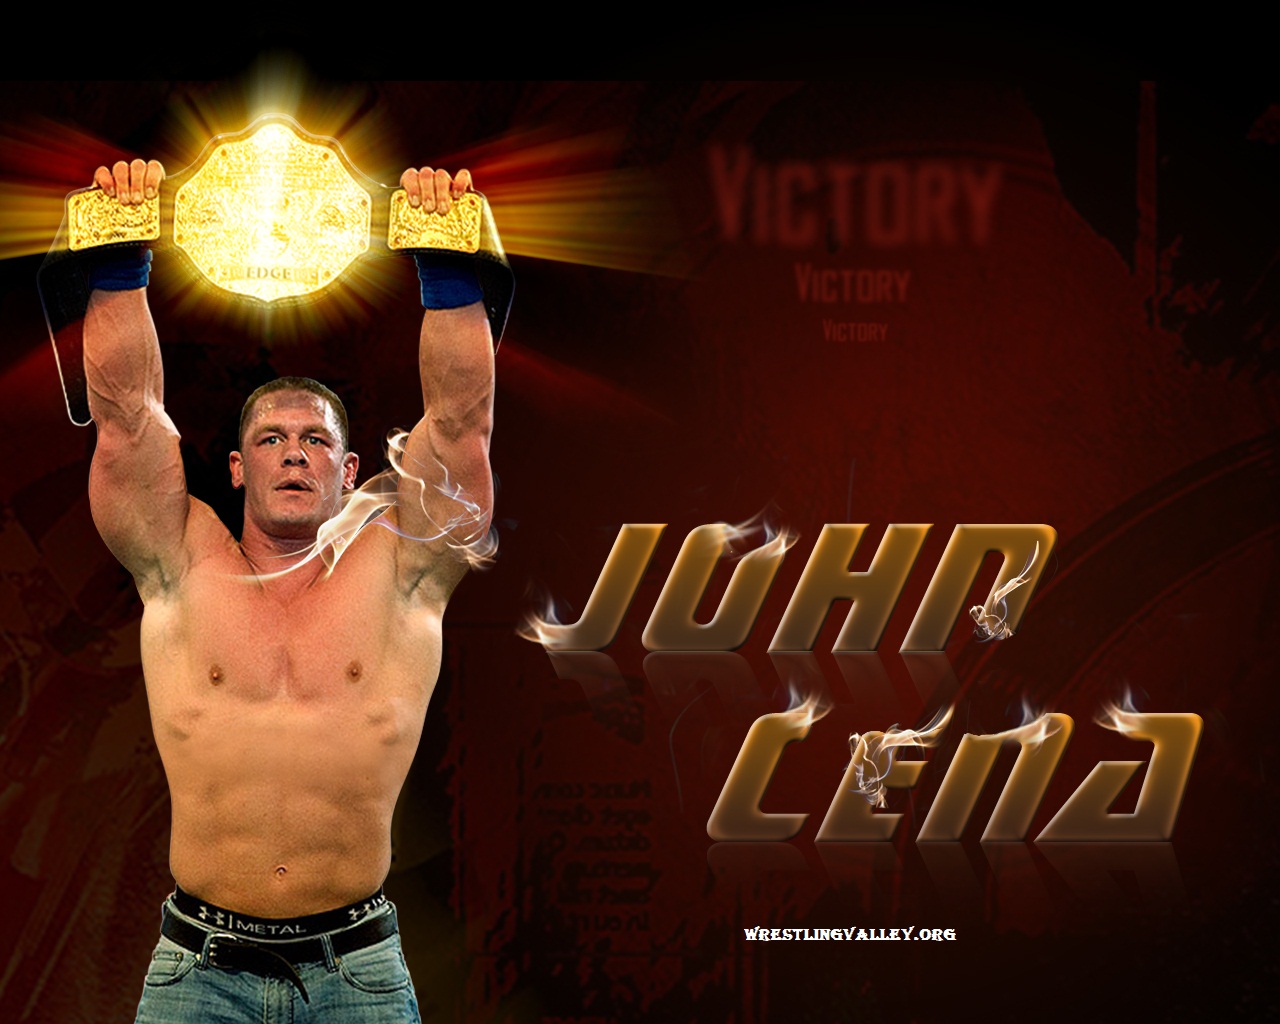 Cool John Cena Wallpaper Hq 480p Nteresting